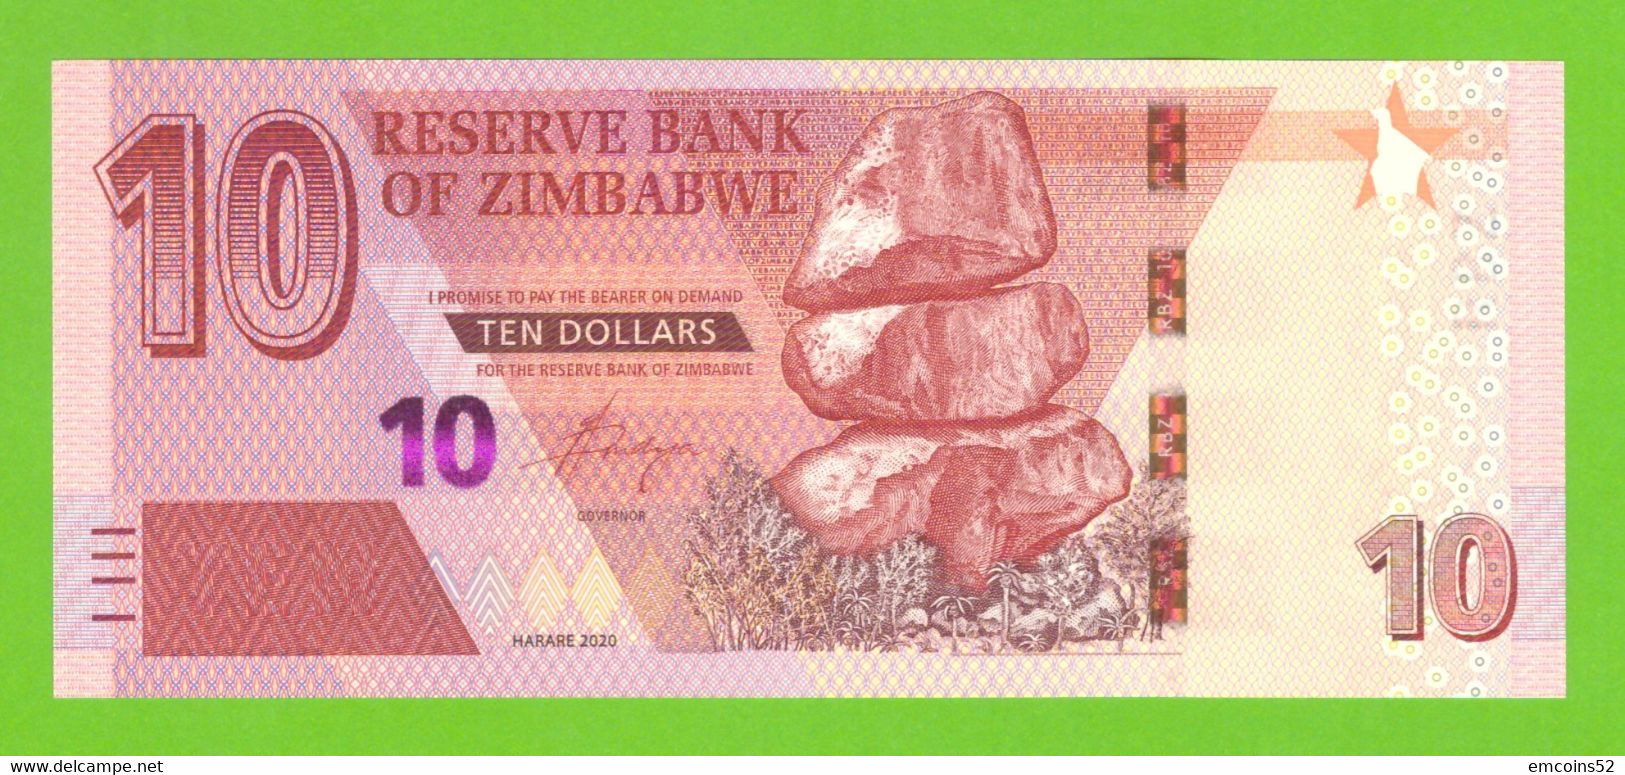 ZIMBABWE 10 DOLLARS 2020  AL  P-W103a UNC - Zimbabwe